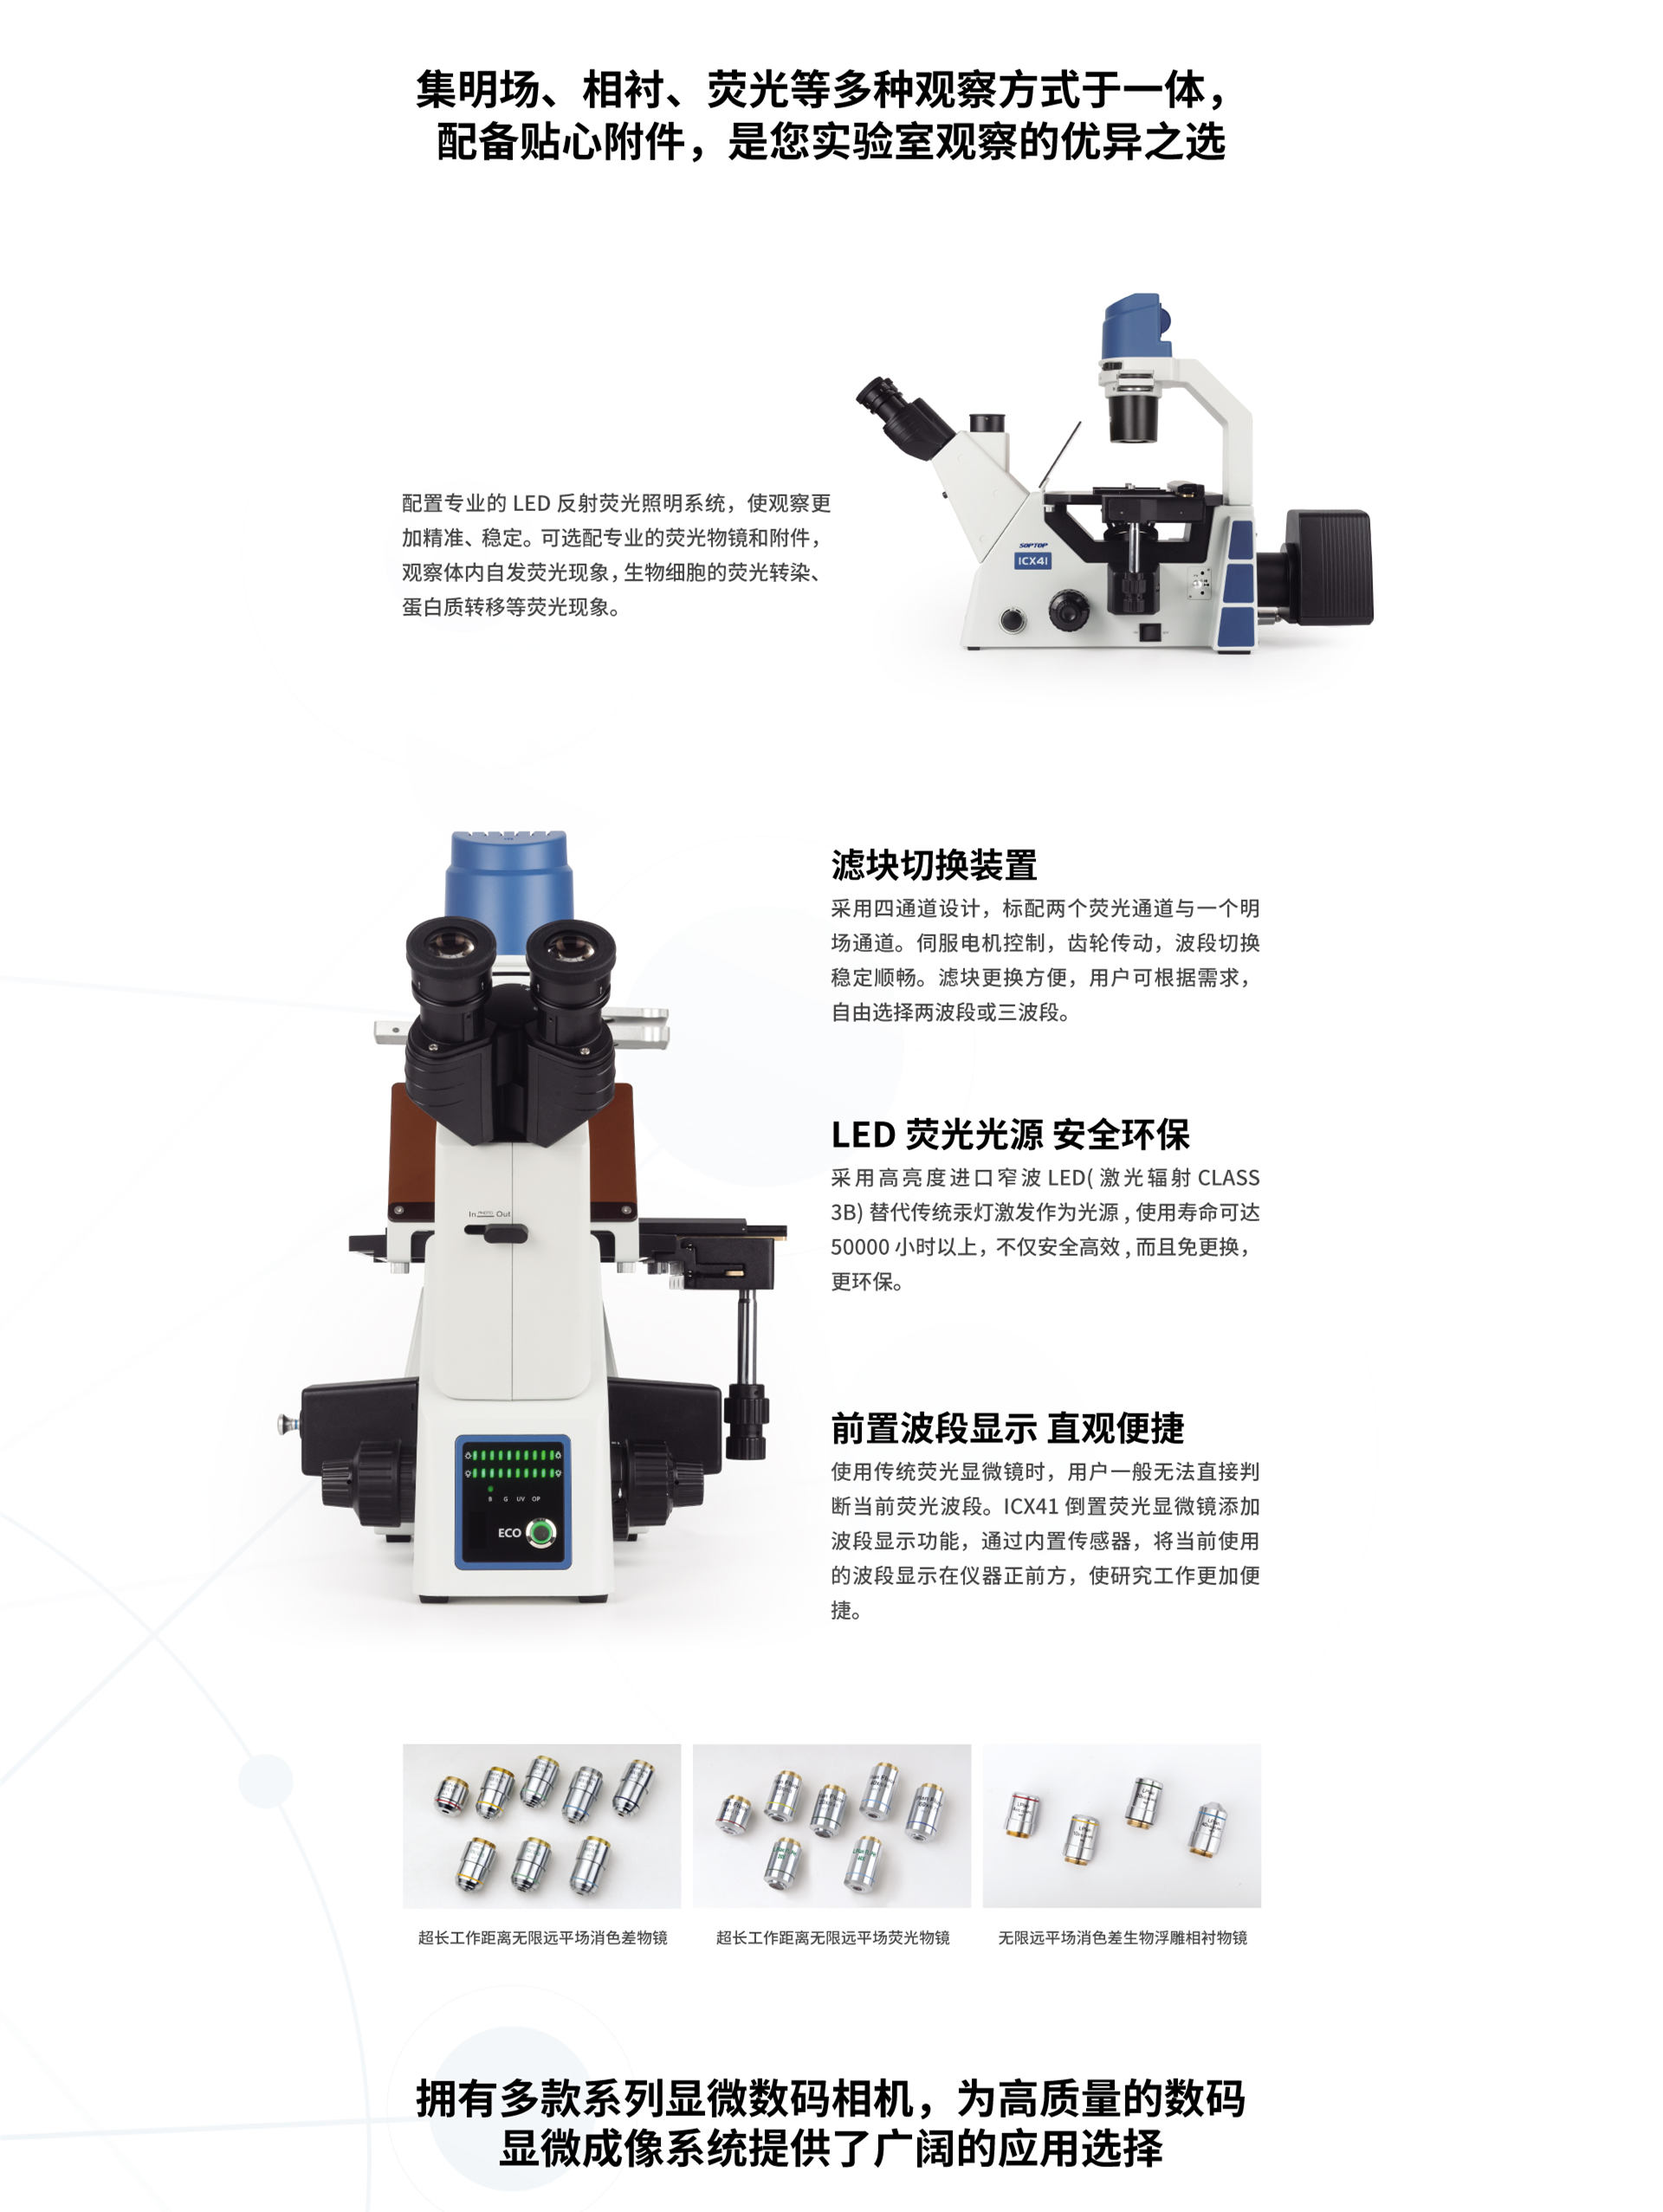 ICX41系列倒置荧光显微镜